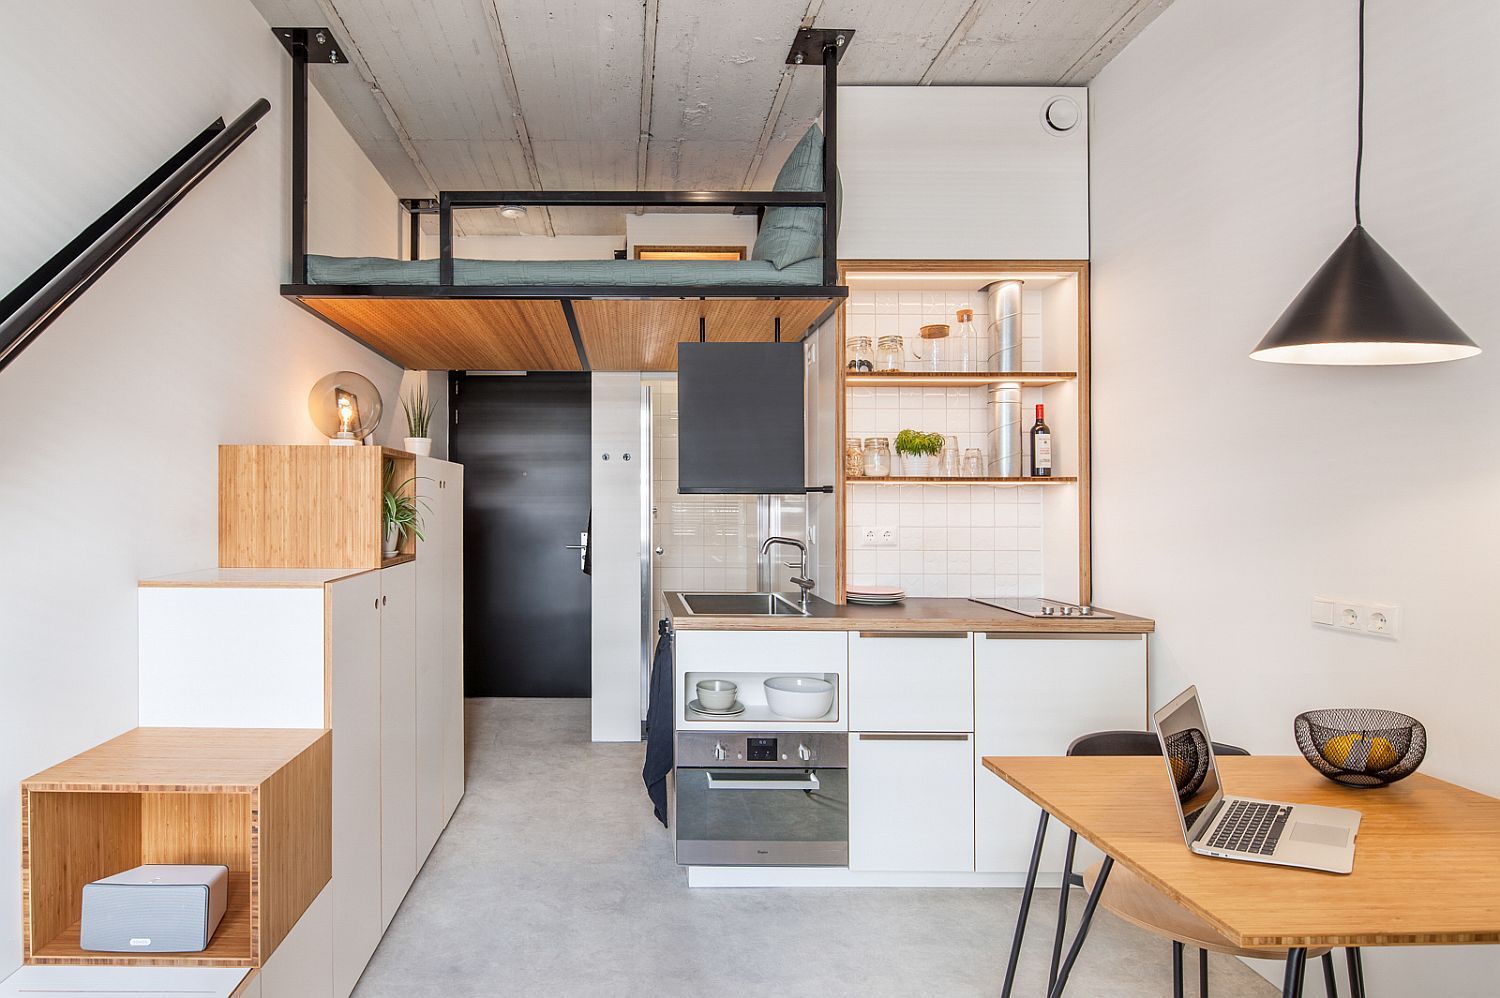 New plan sees Copenhagen going for smaller apartments